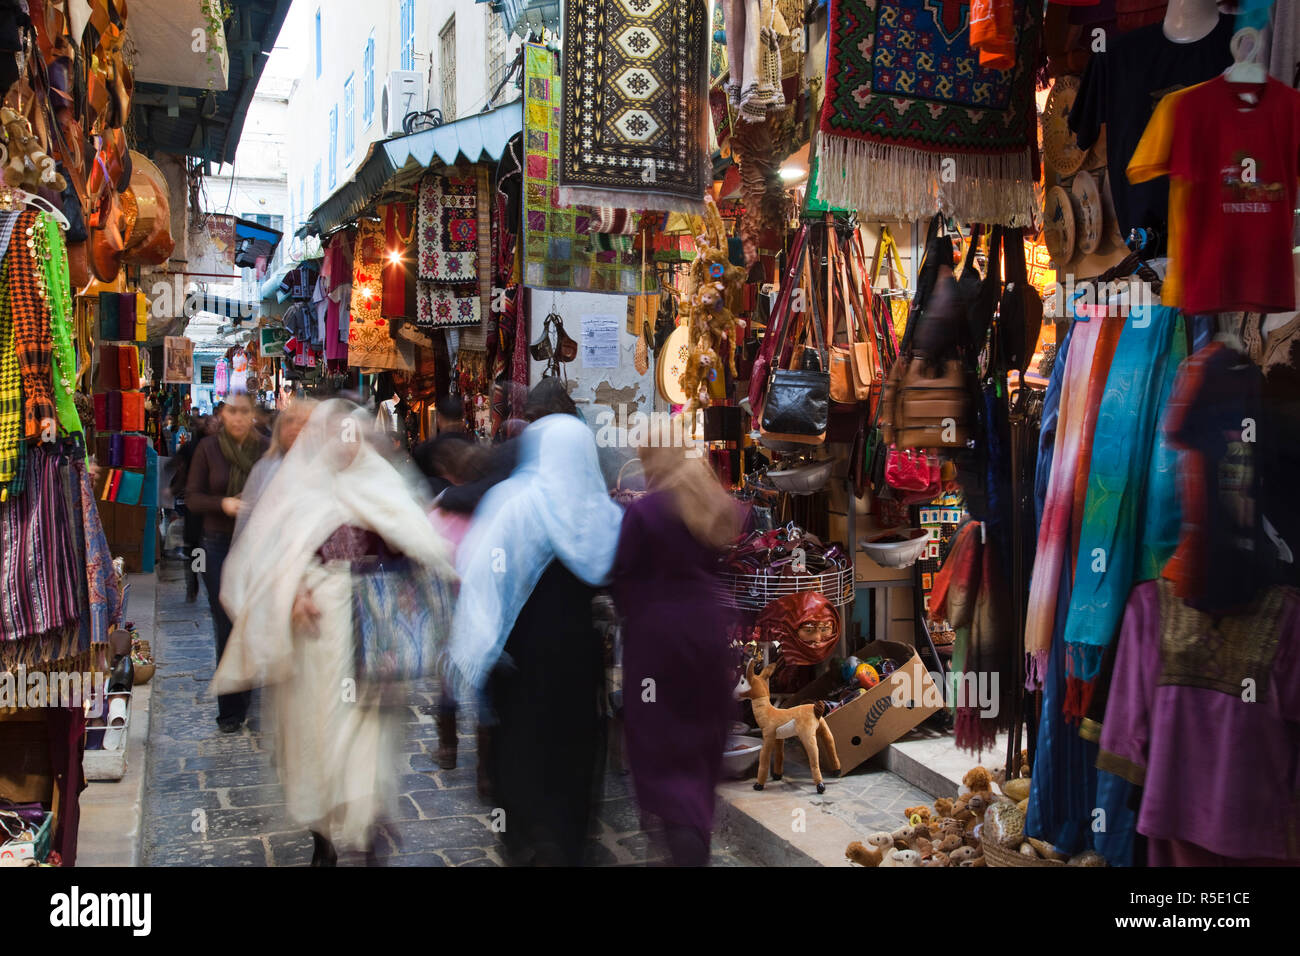 Tunisia, Tunis, Medina, at the Souq markets Stock Photo